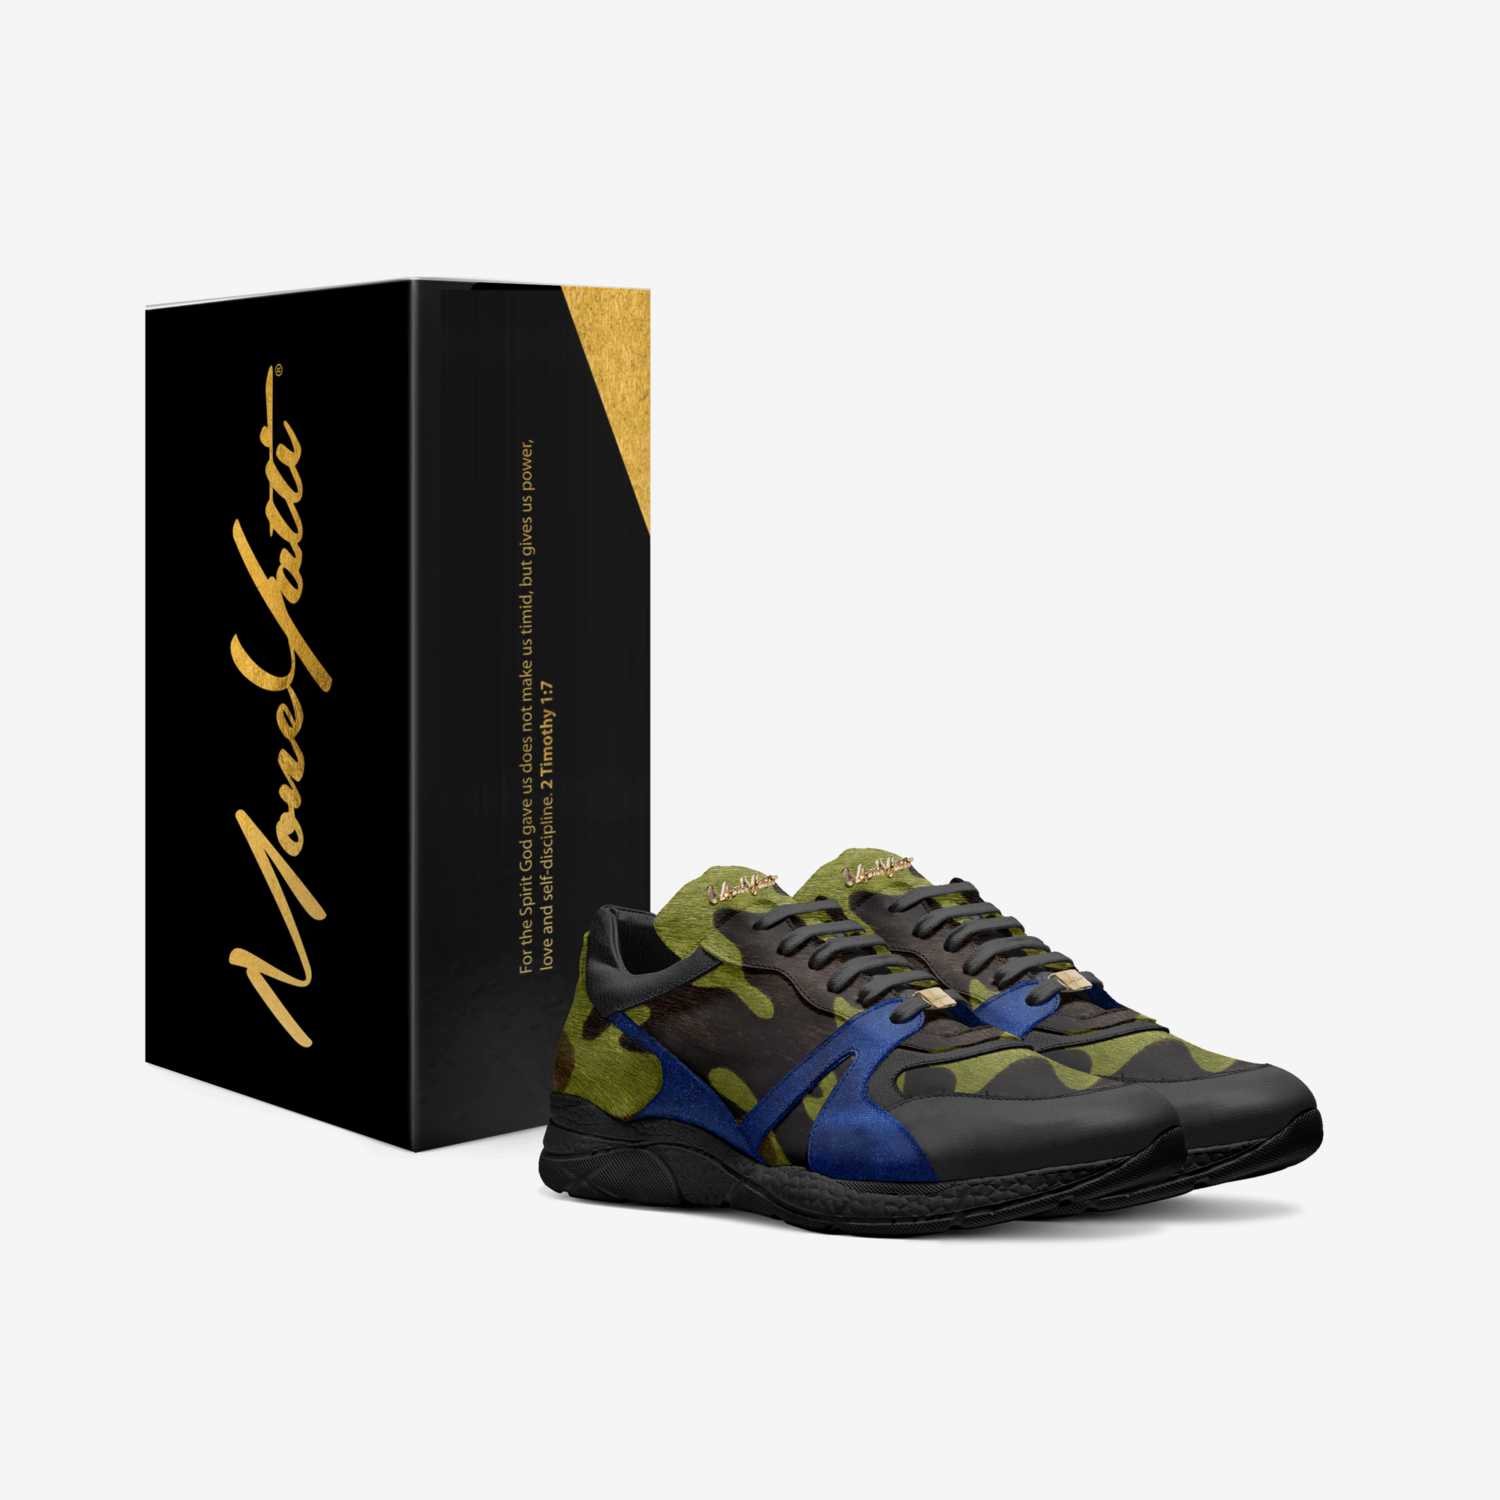 Nem P 52 custom made in Italy shoes by Moneyatti Brand | Box view